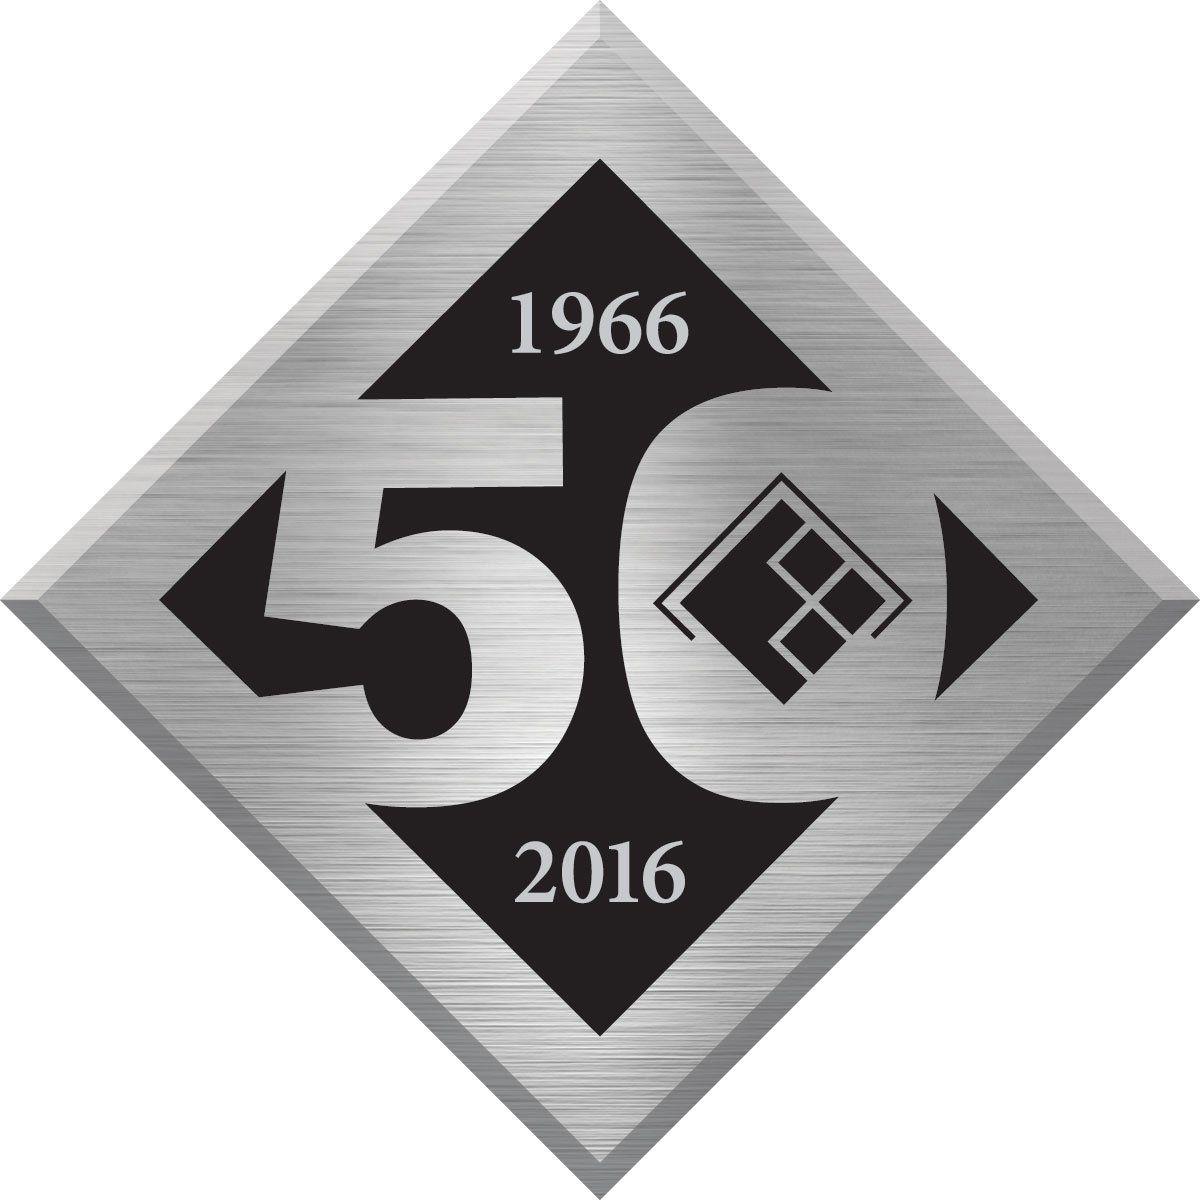 Rinamar Logo - Linamar Corporation is celebrating our 50th